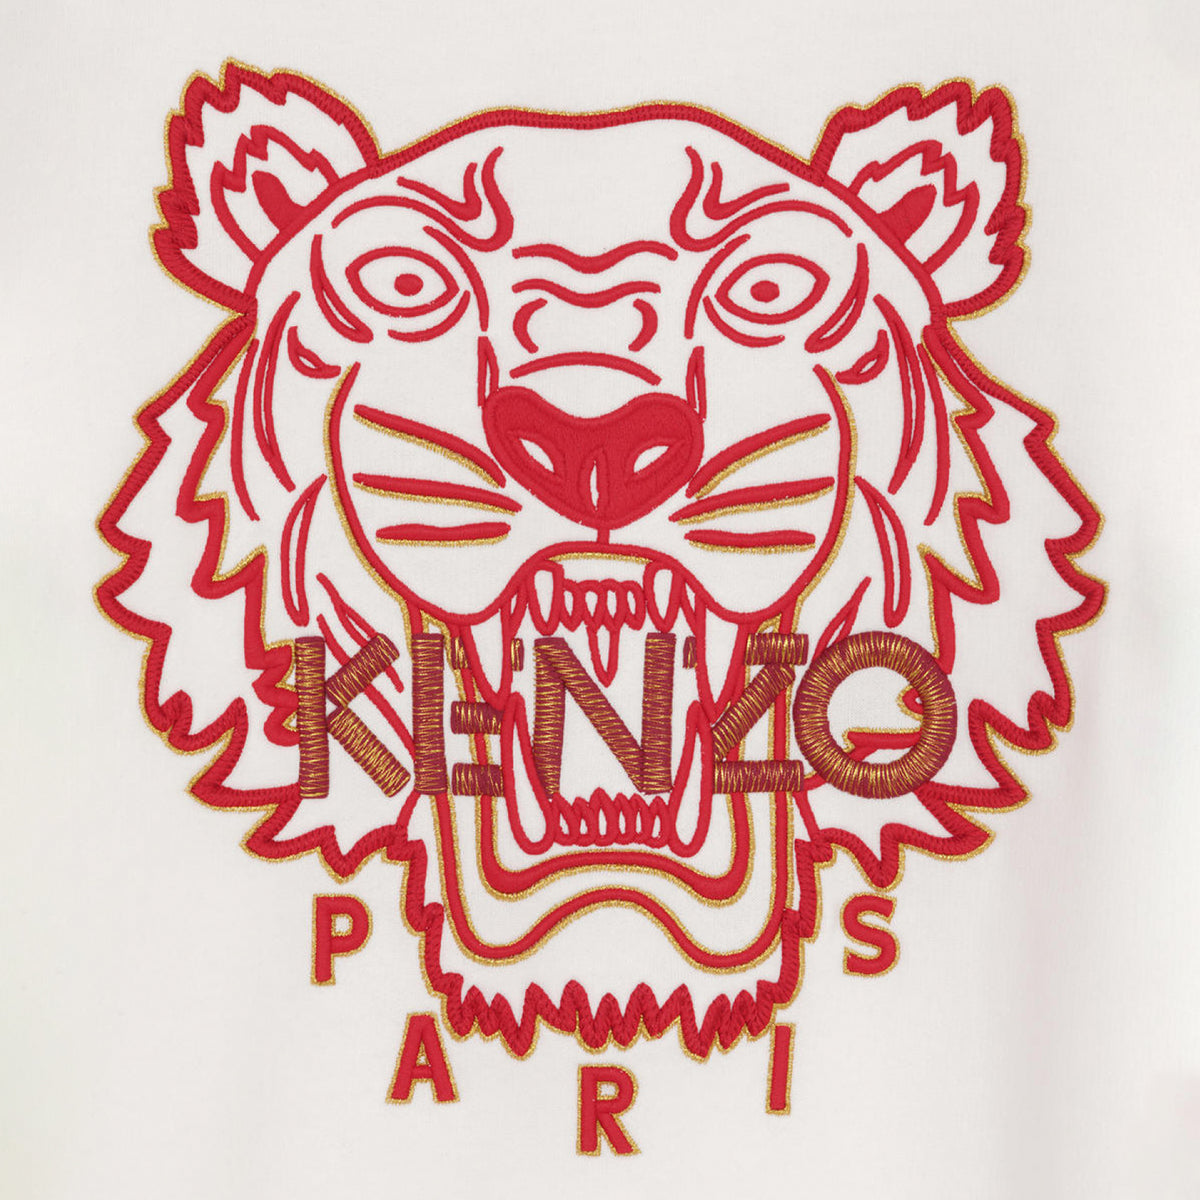 Kenzo Men's 'Year of The Tiger' Sweatshirt